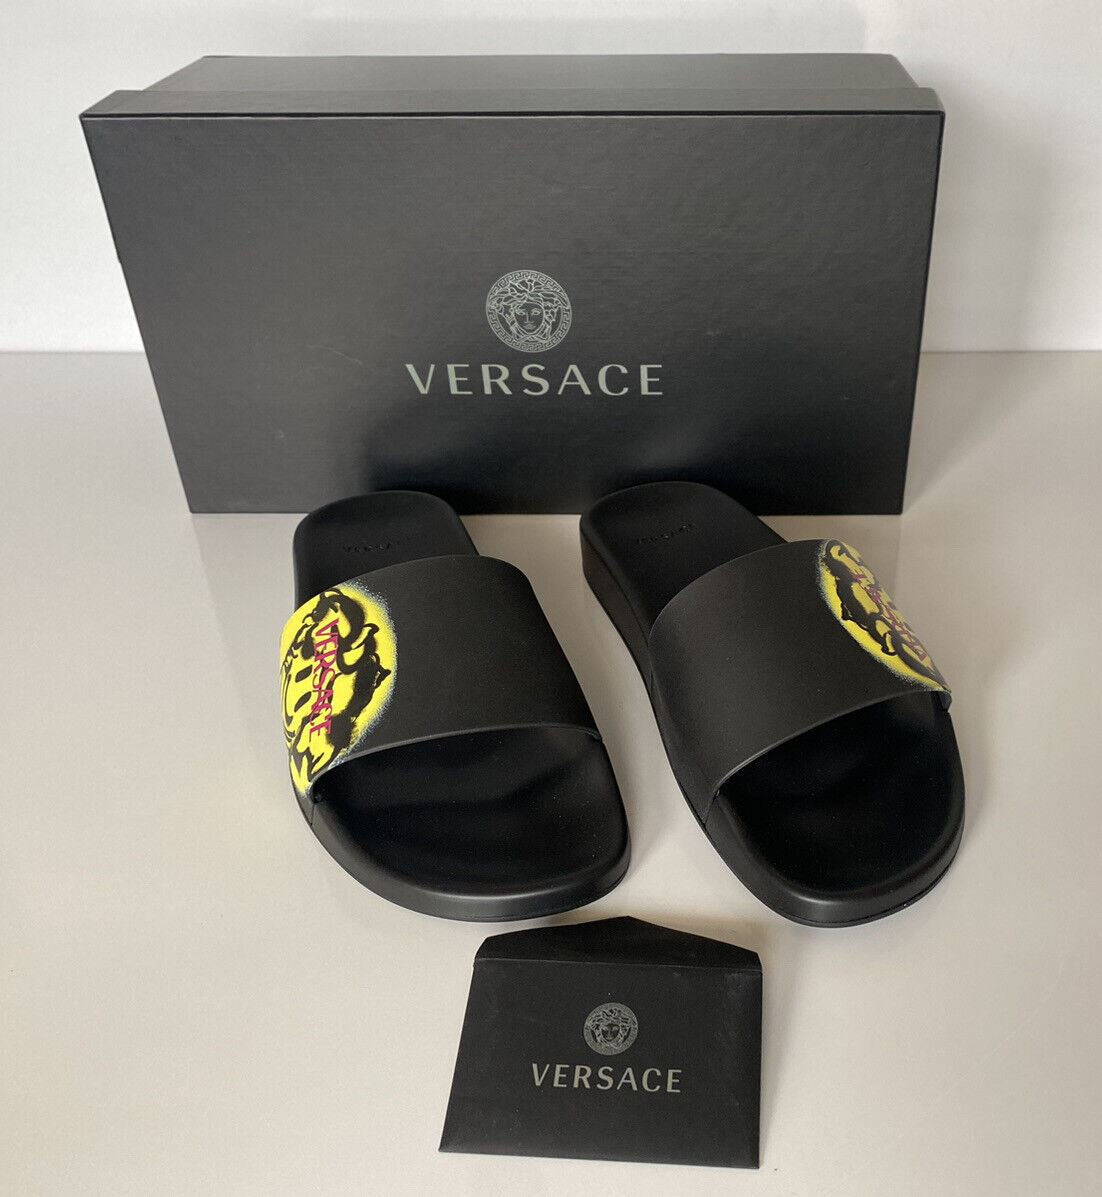 NIB $450 Versace Baroccoflage Pool Slides Sandals Black 8 US (41 Eu) IT DSU6516